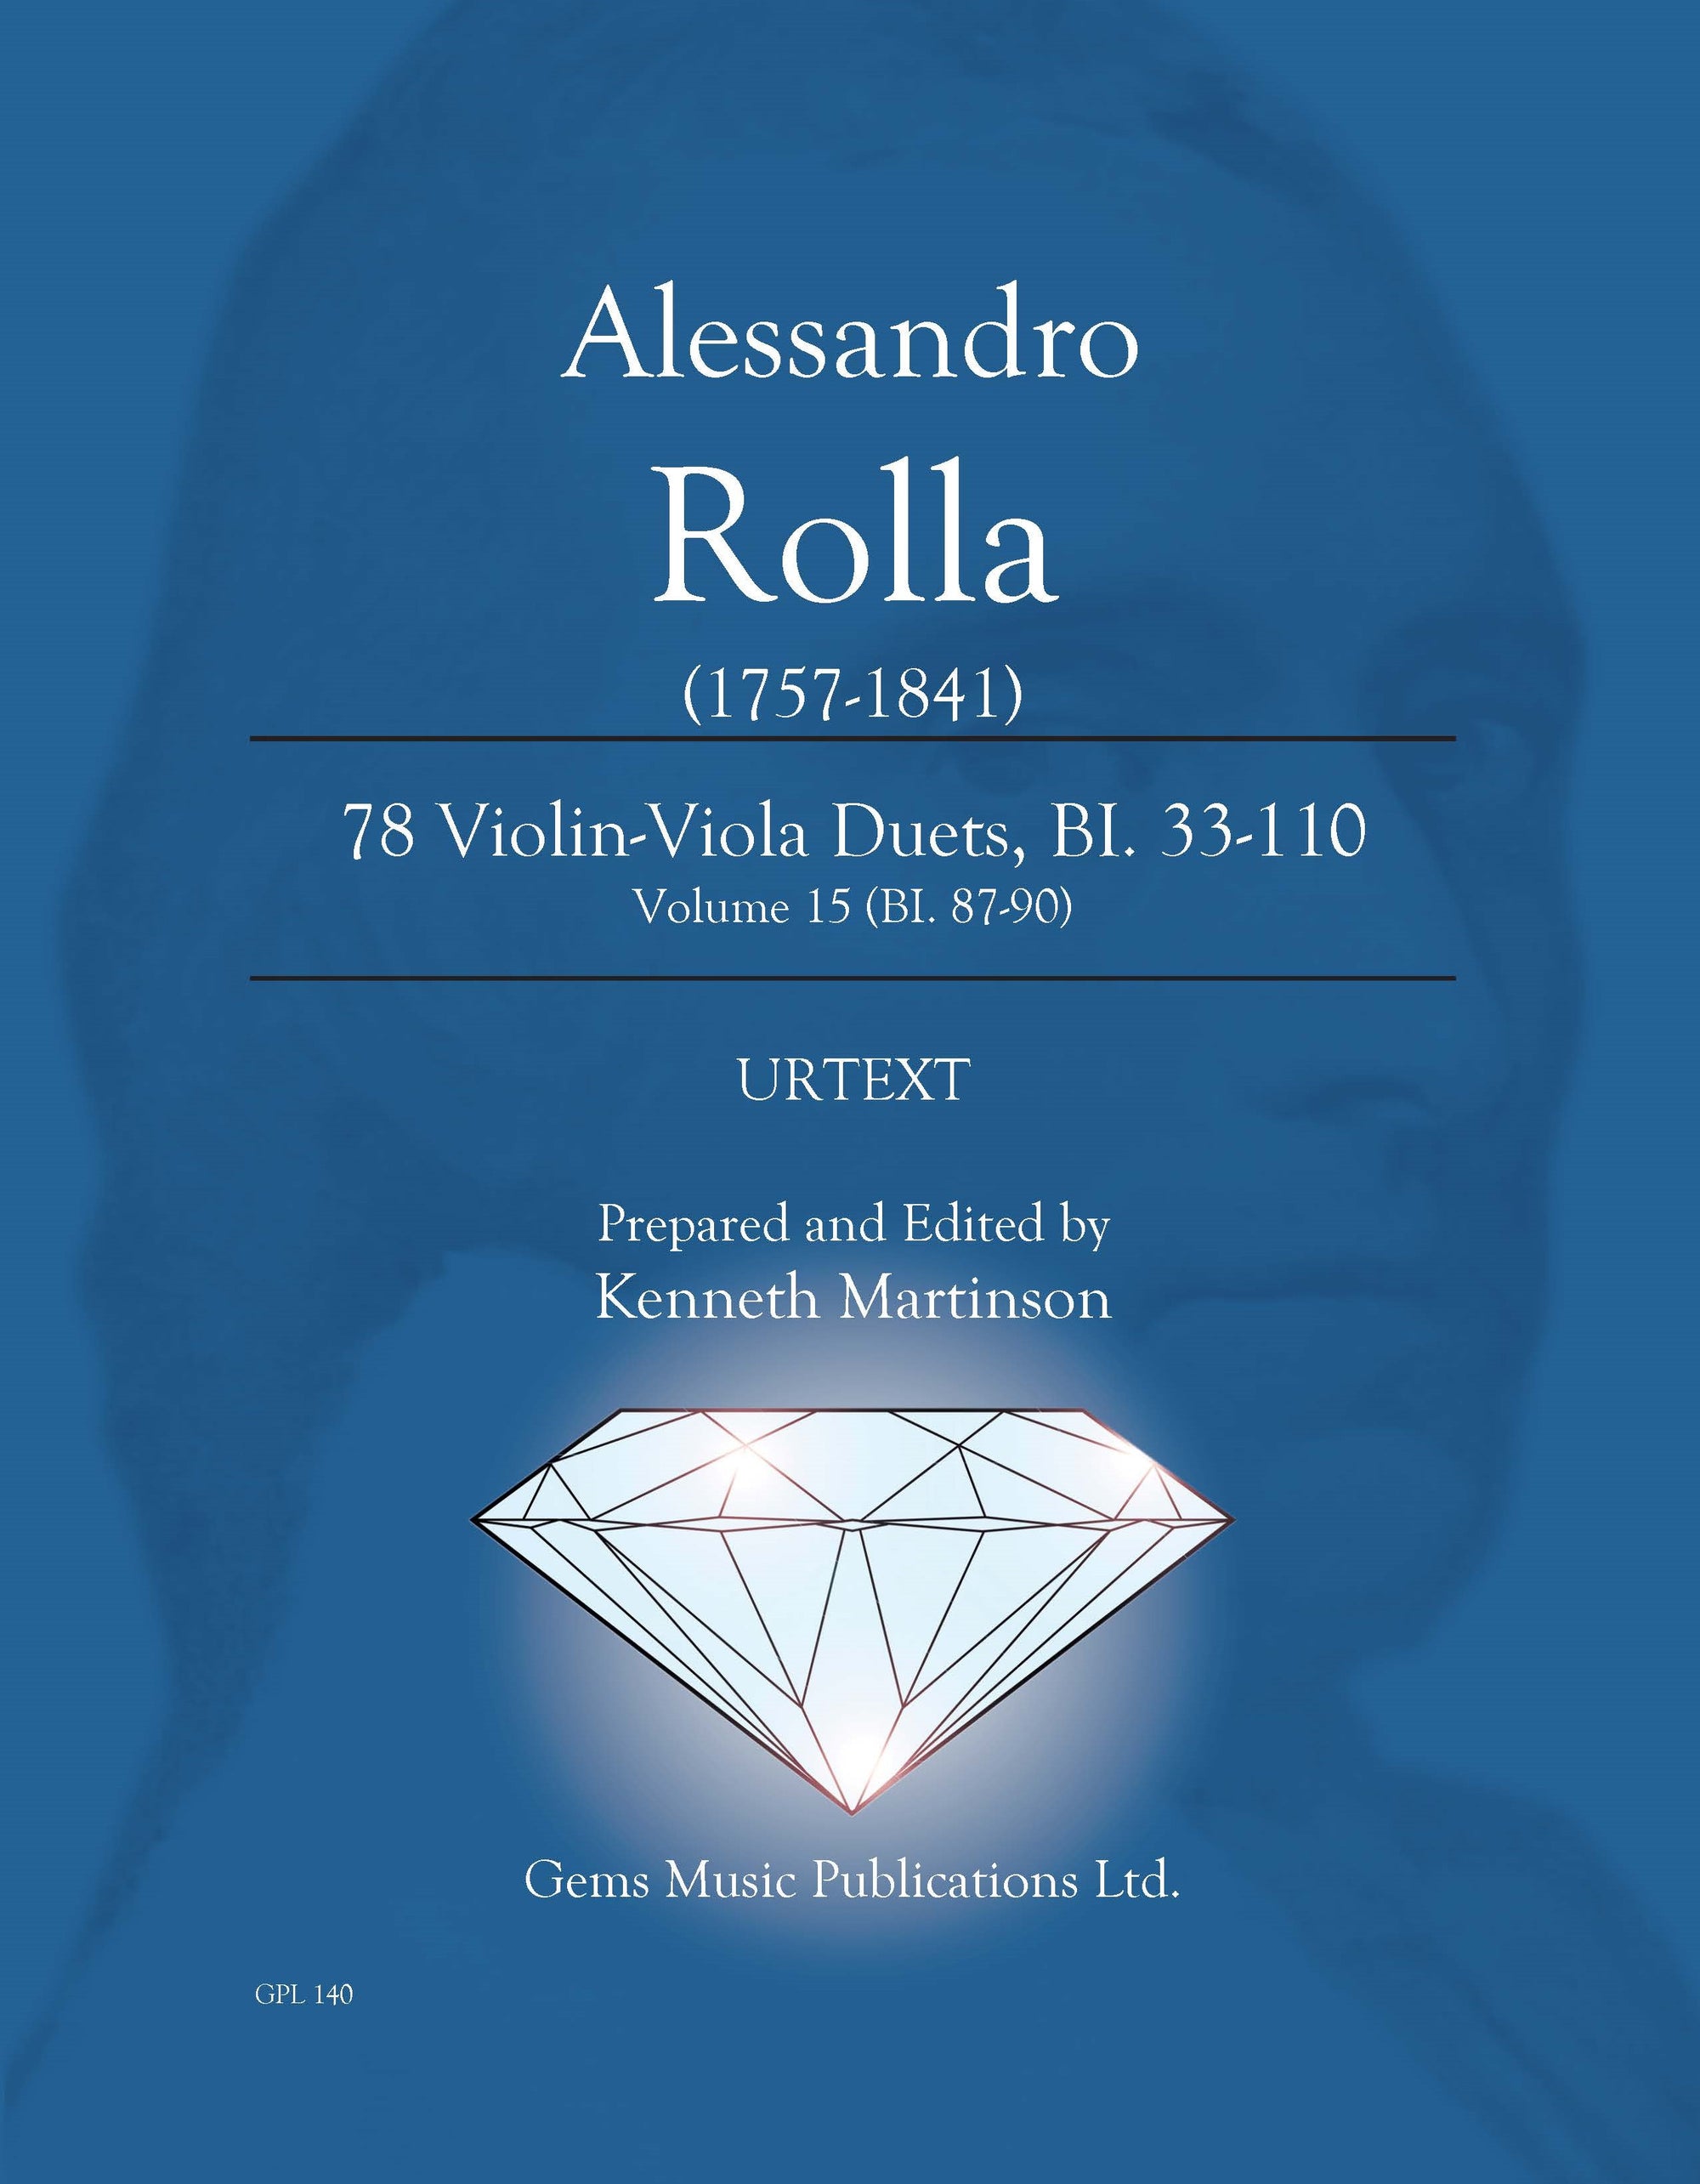 Rolla: Violin-Viola Duets - Volume 15 (BI. 87-90)